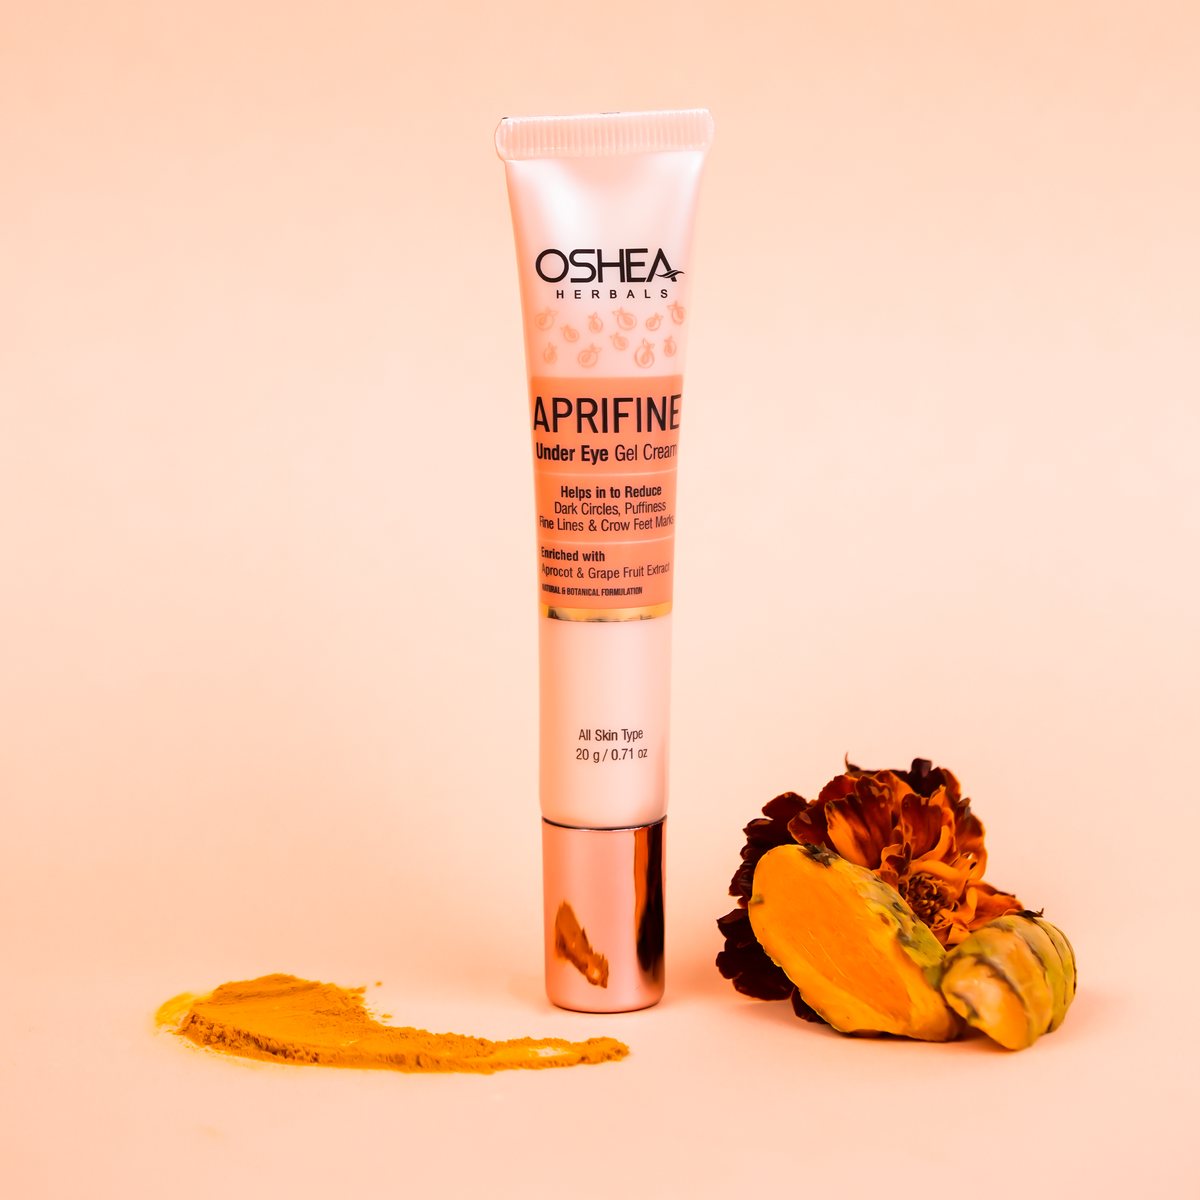 Aprifine Apricot Cream for Under Eye Dark Circle Oshea Herbals